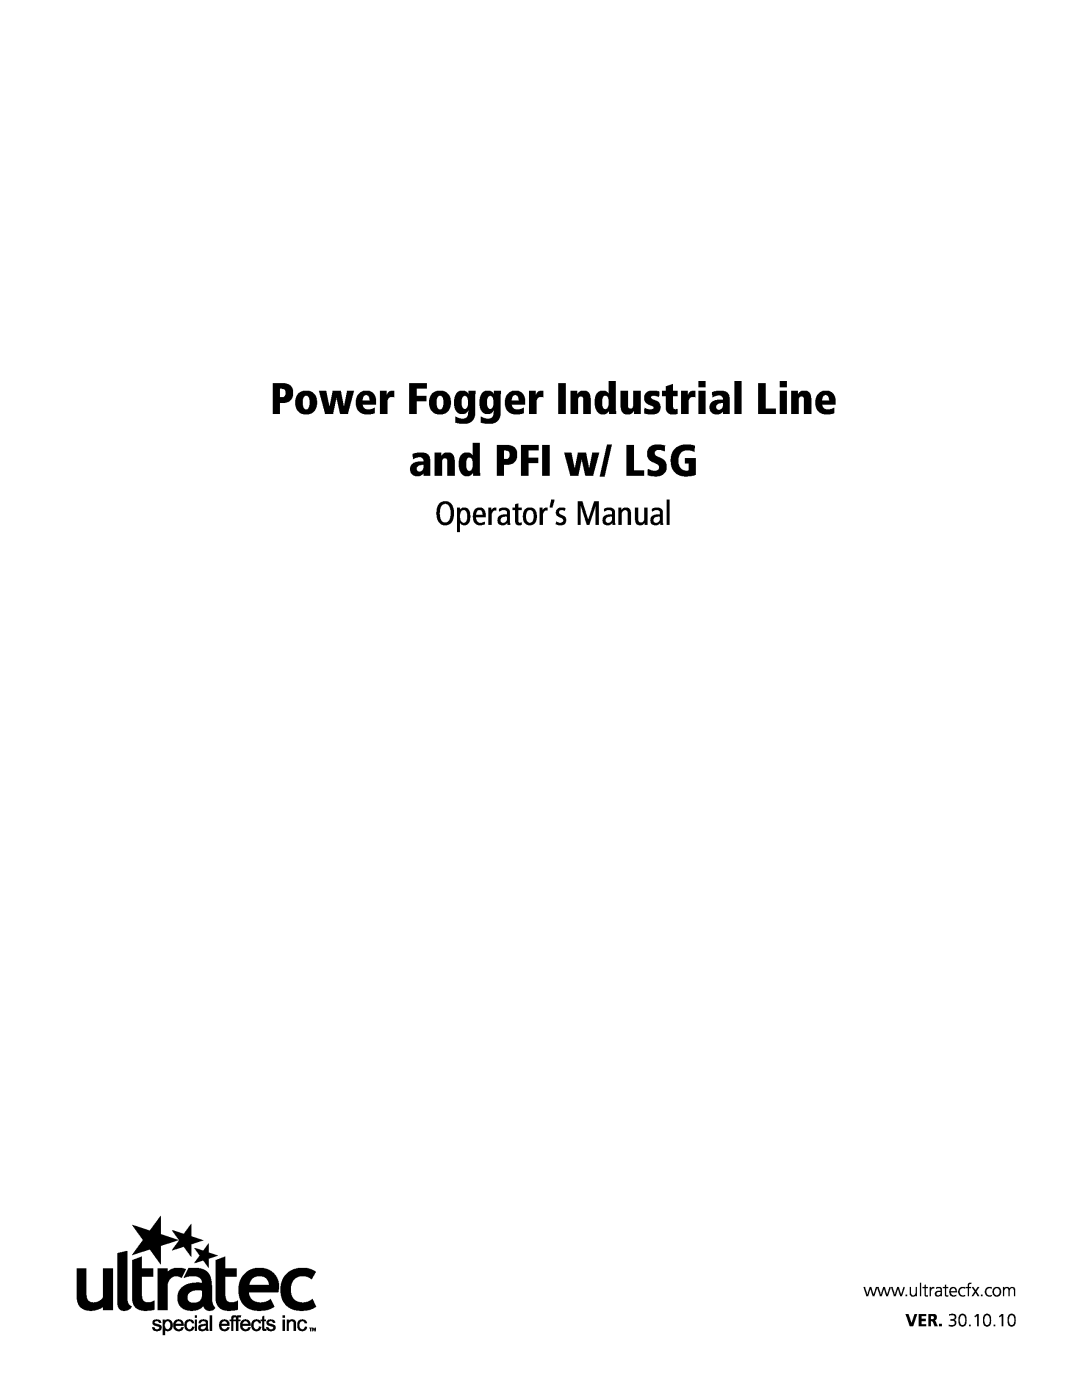 Ultratec PFI-9D manual Power Fogger Industrial Line and PFI w/ LSG, Operator’s Manual 